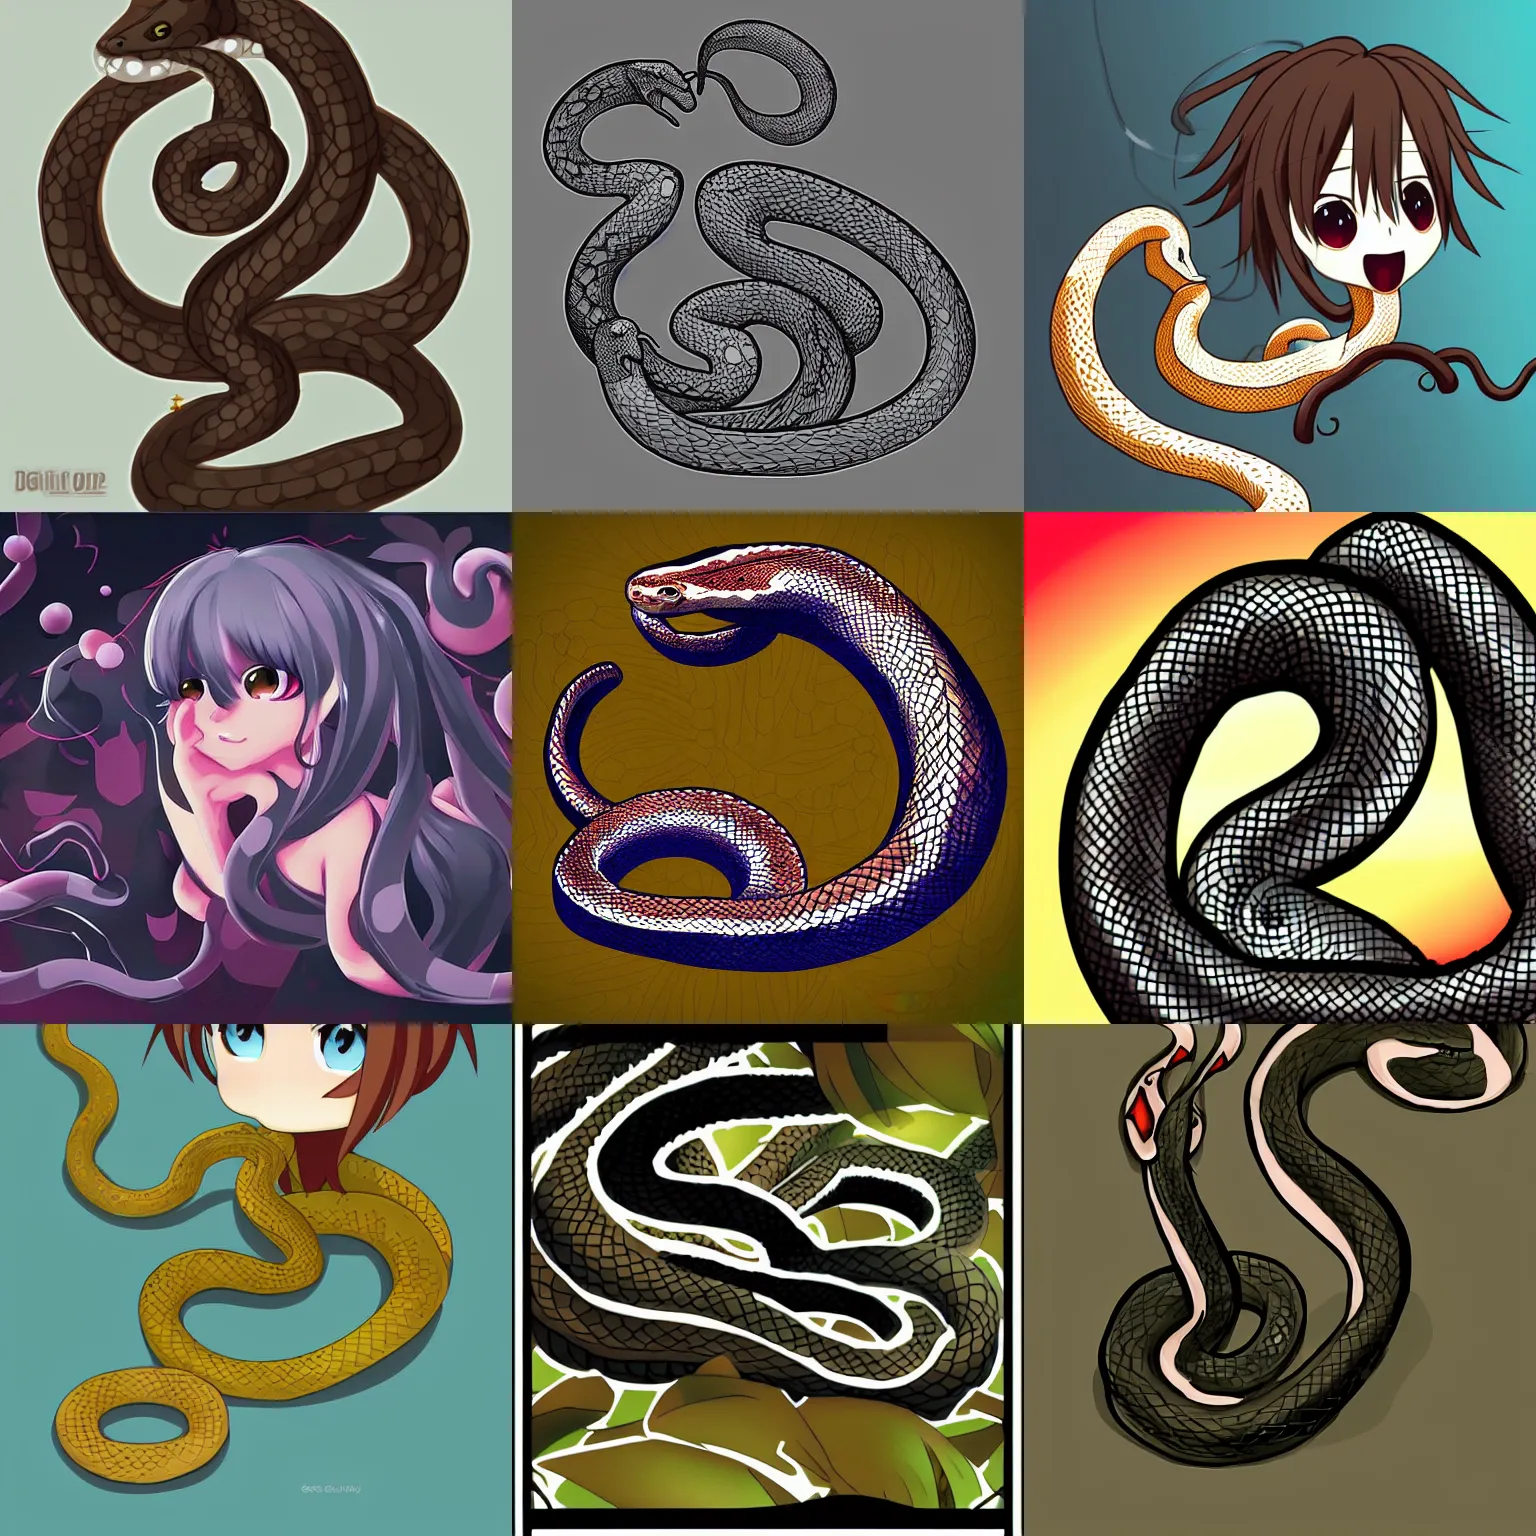 Prompt: cute snake, digital art, anime character